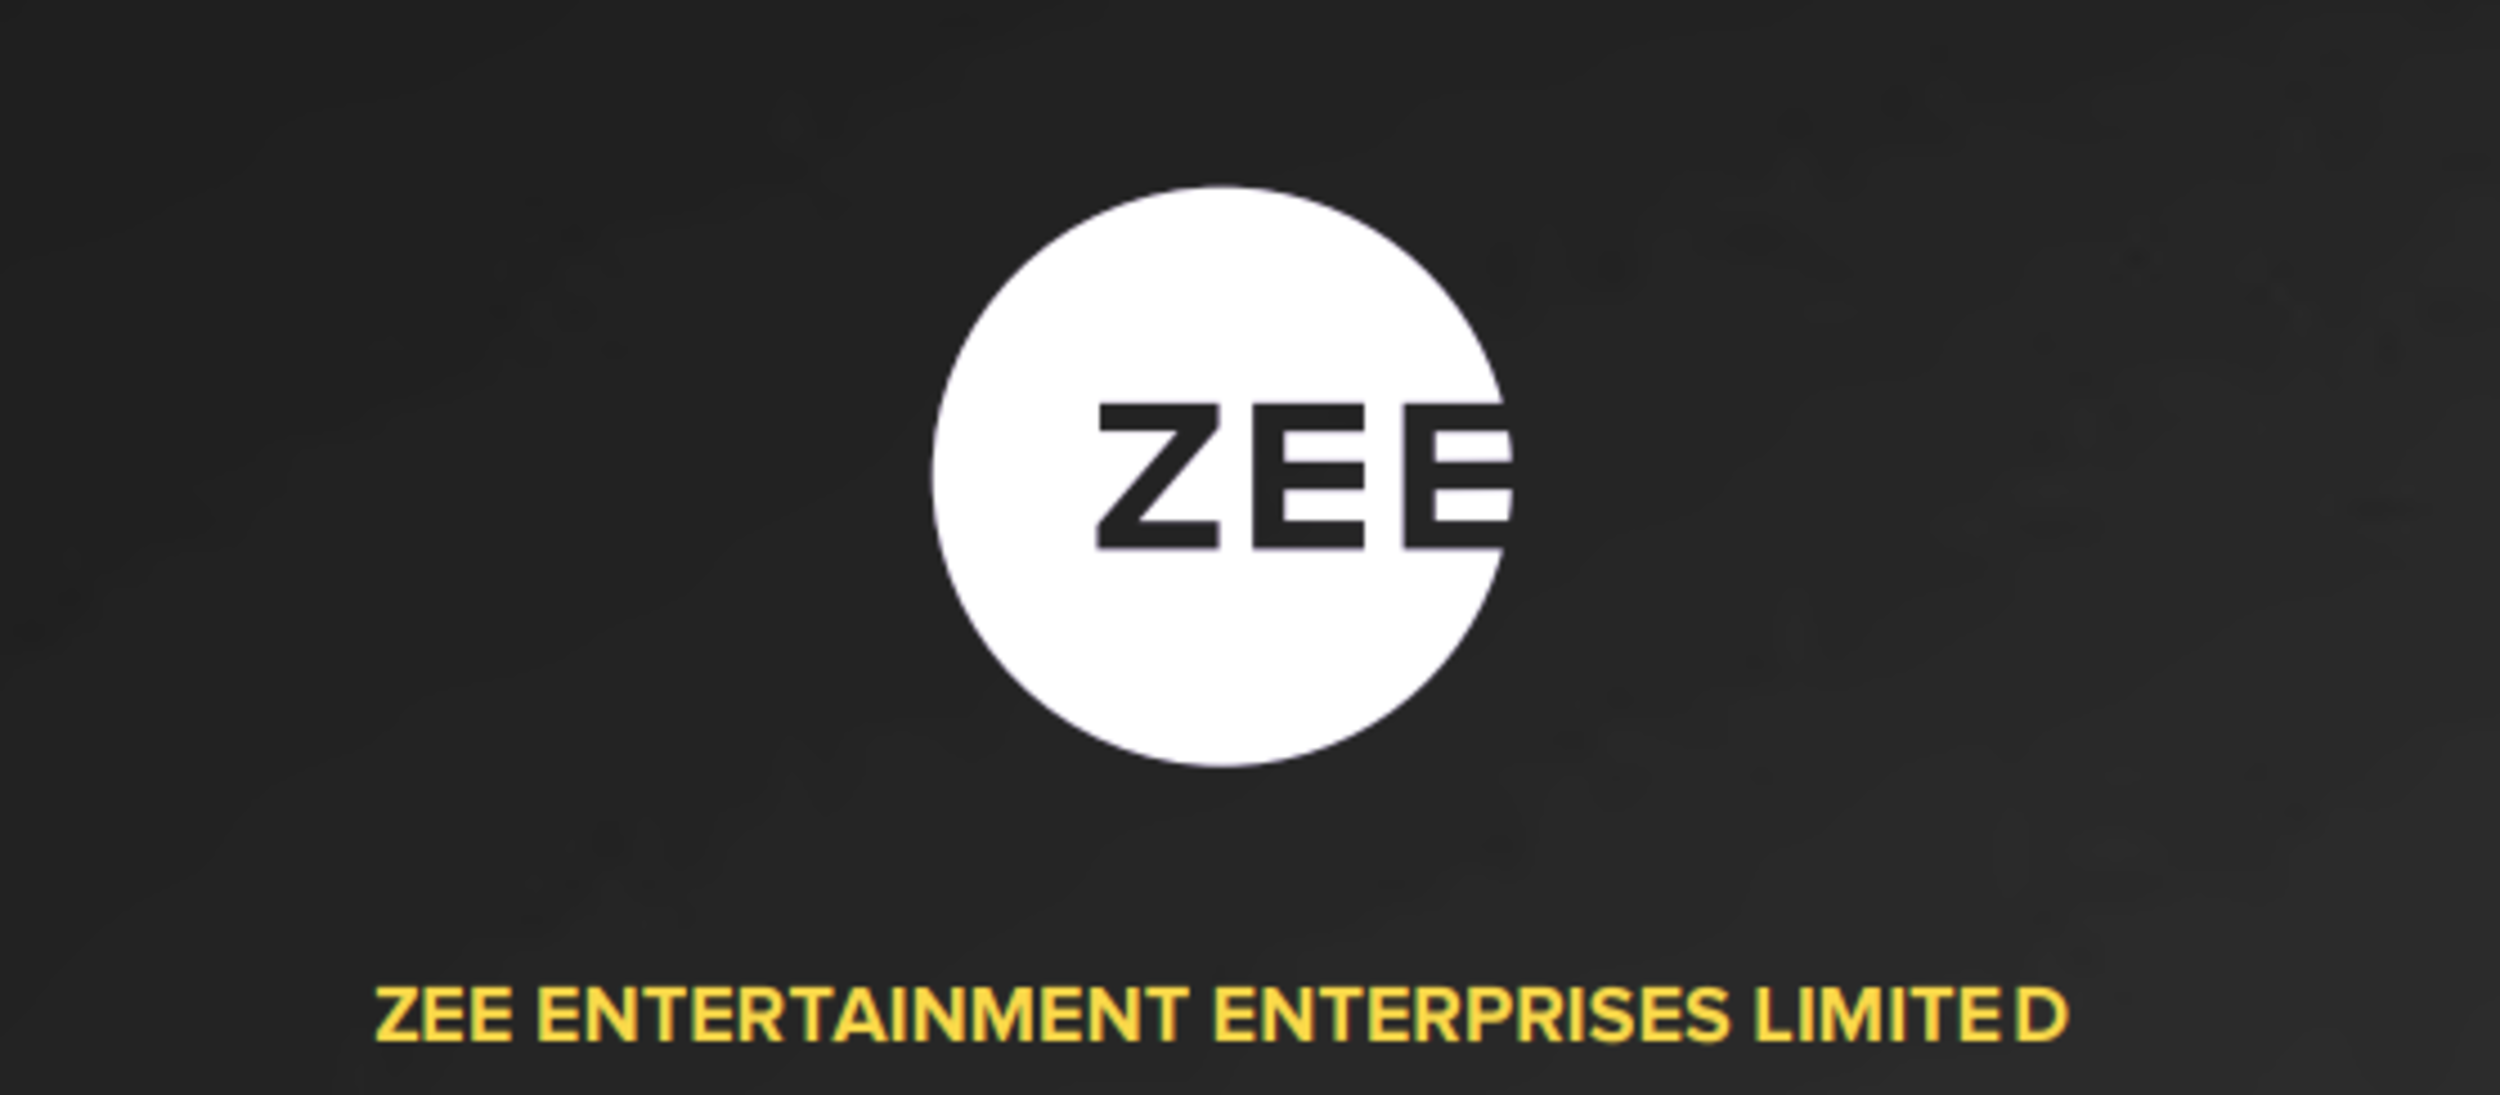 Zee Entertainment Enterprises Limited [ZEEL] Company - IndianCompanies.in